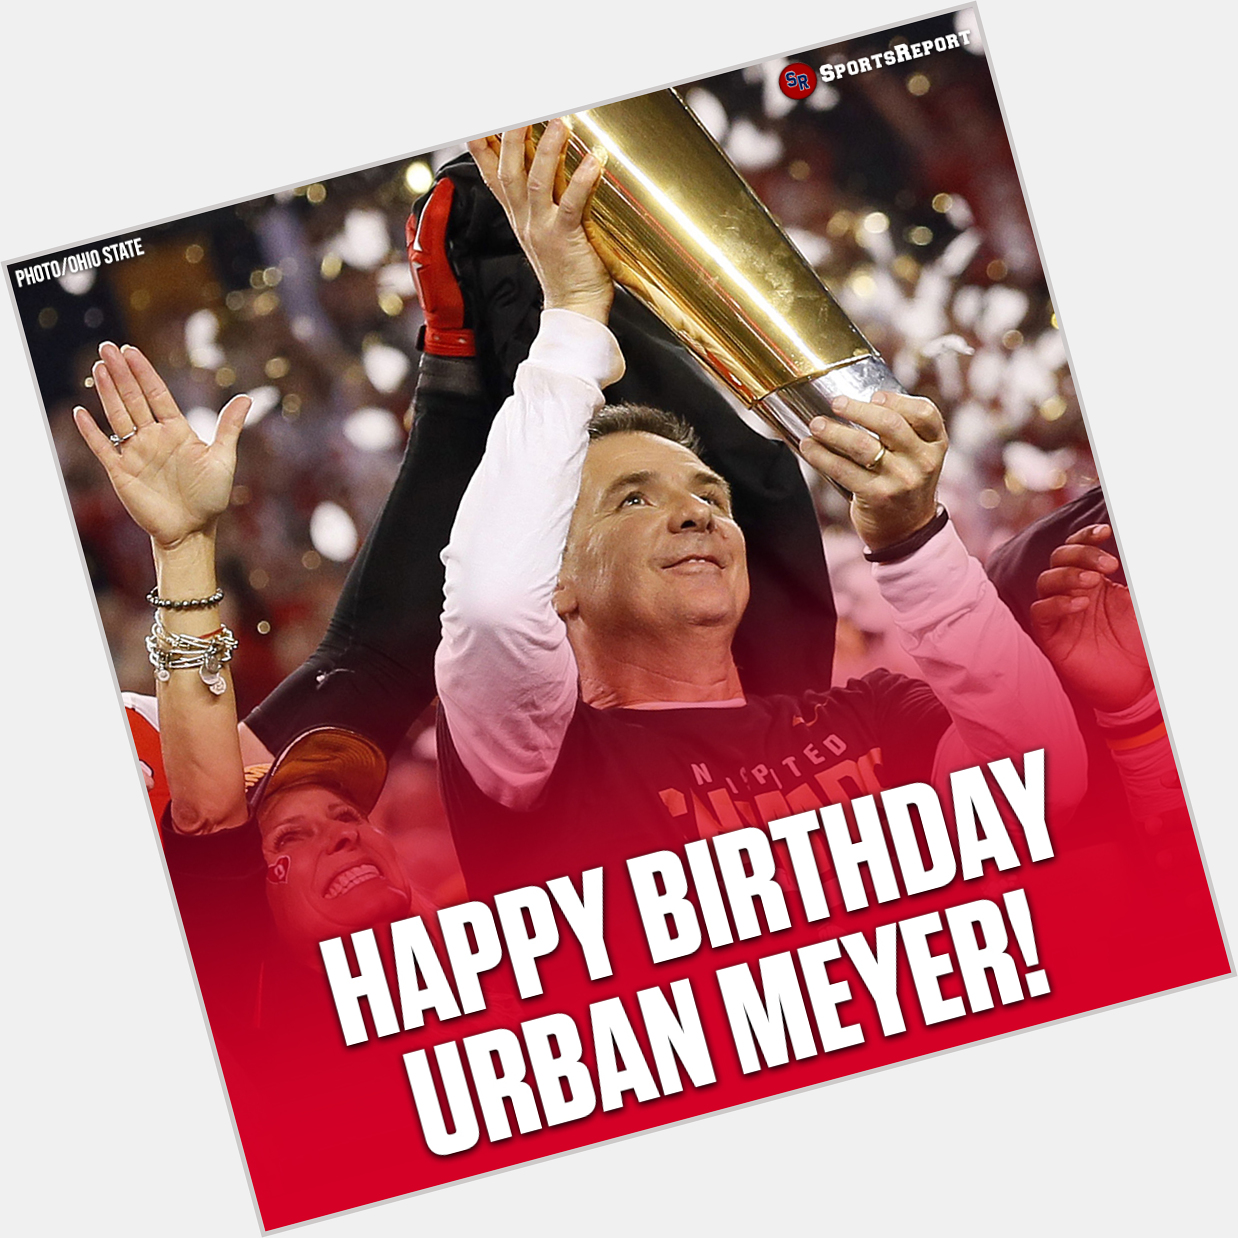  Fans, let\s wish Coaching Legend Urban Meyer a Happy Birthday!! 